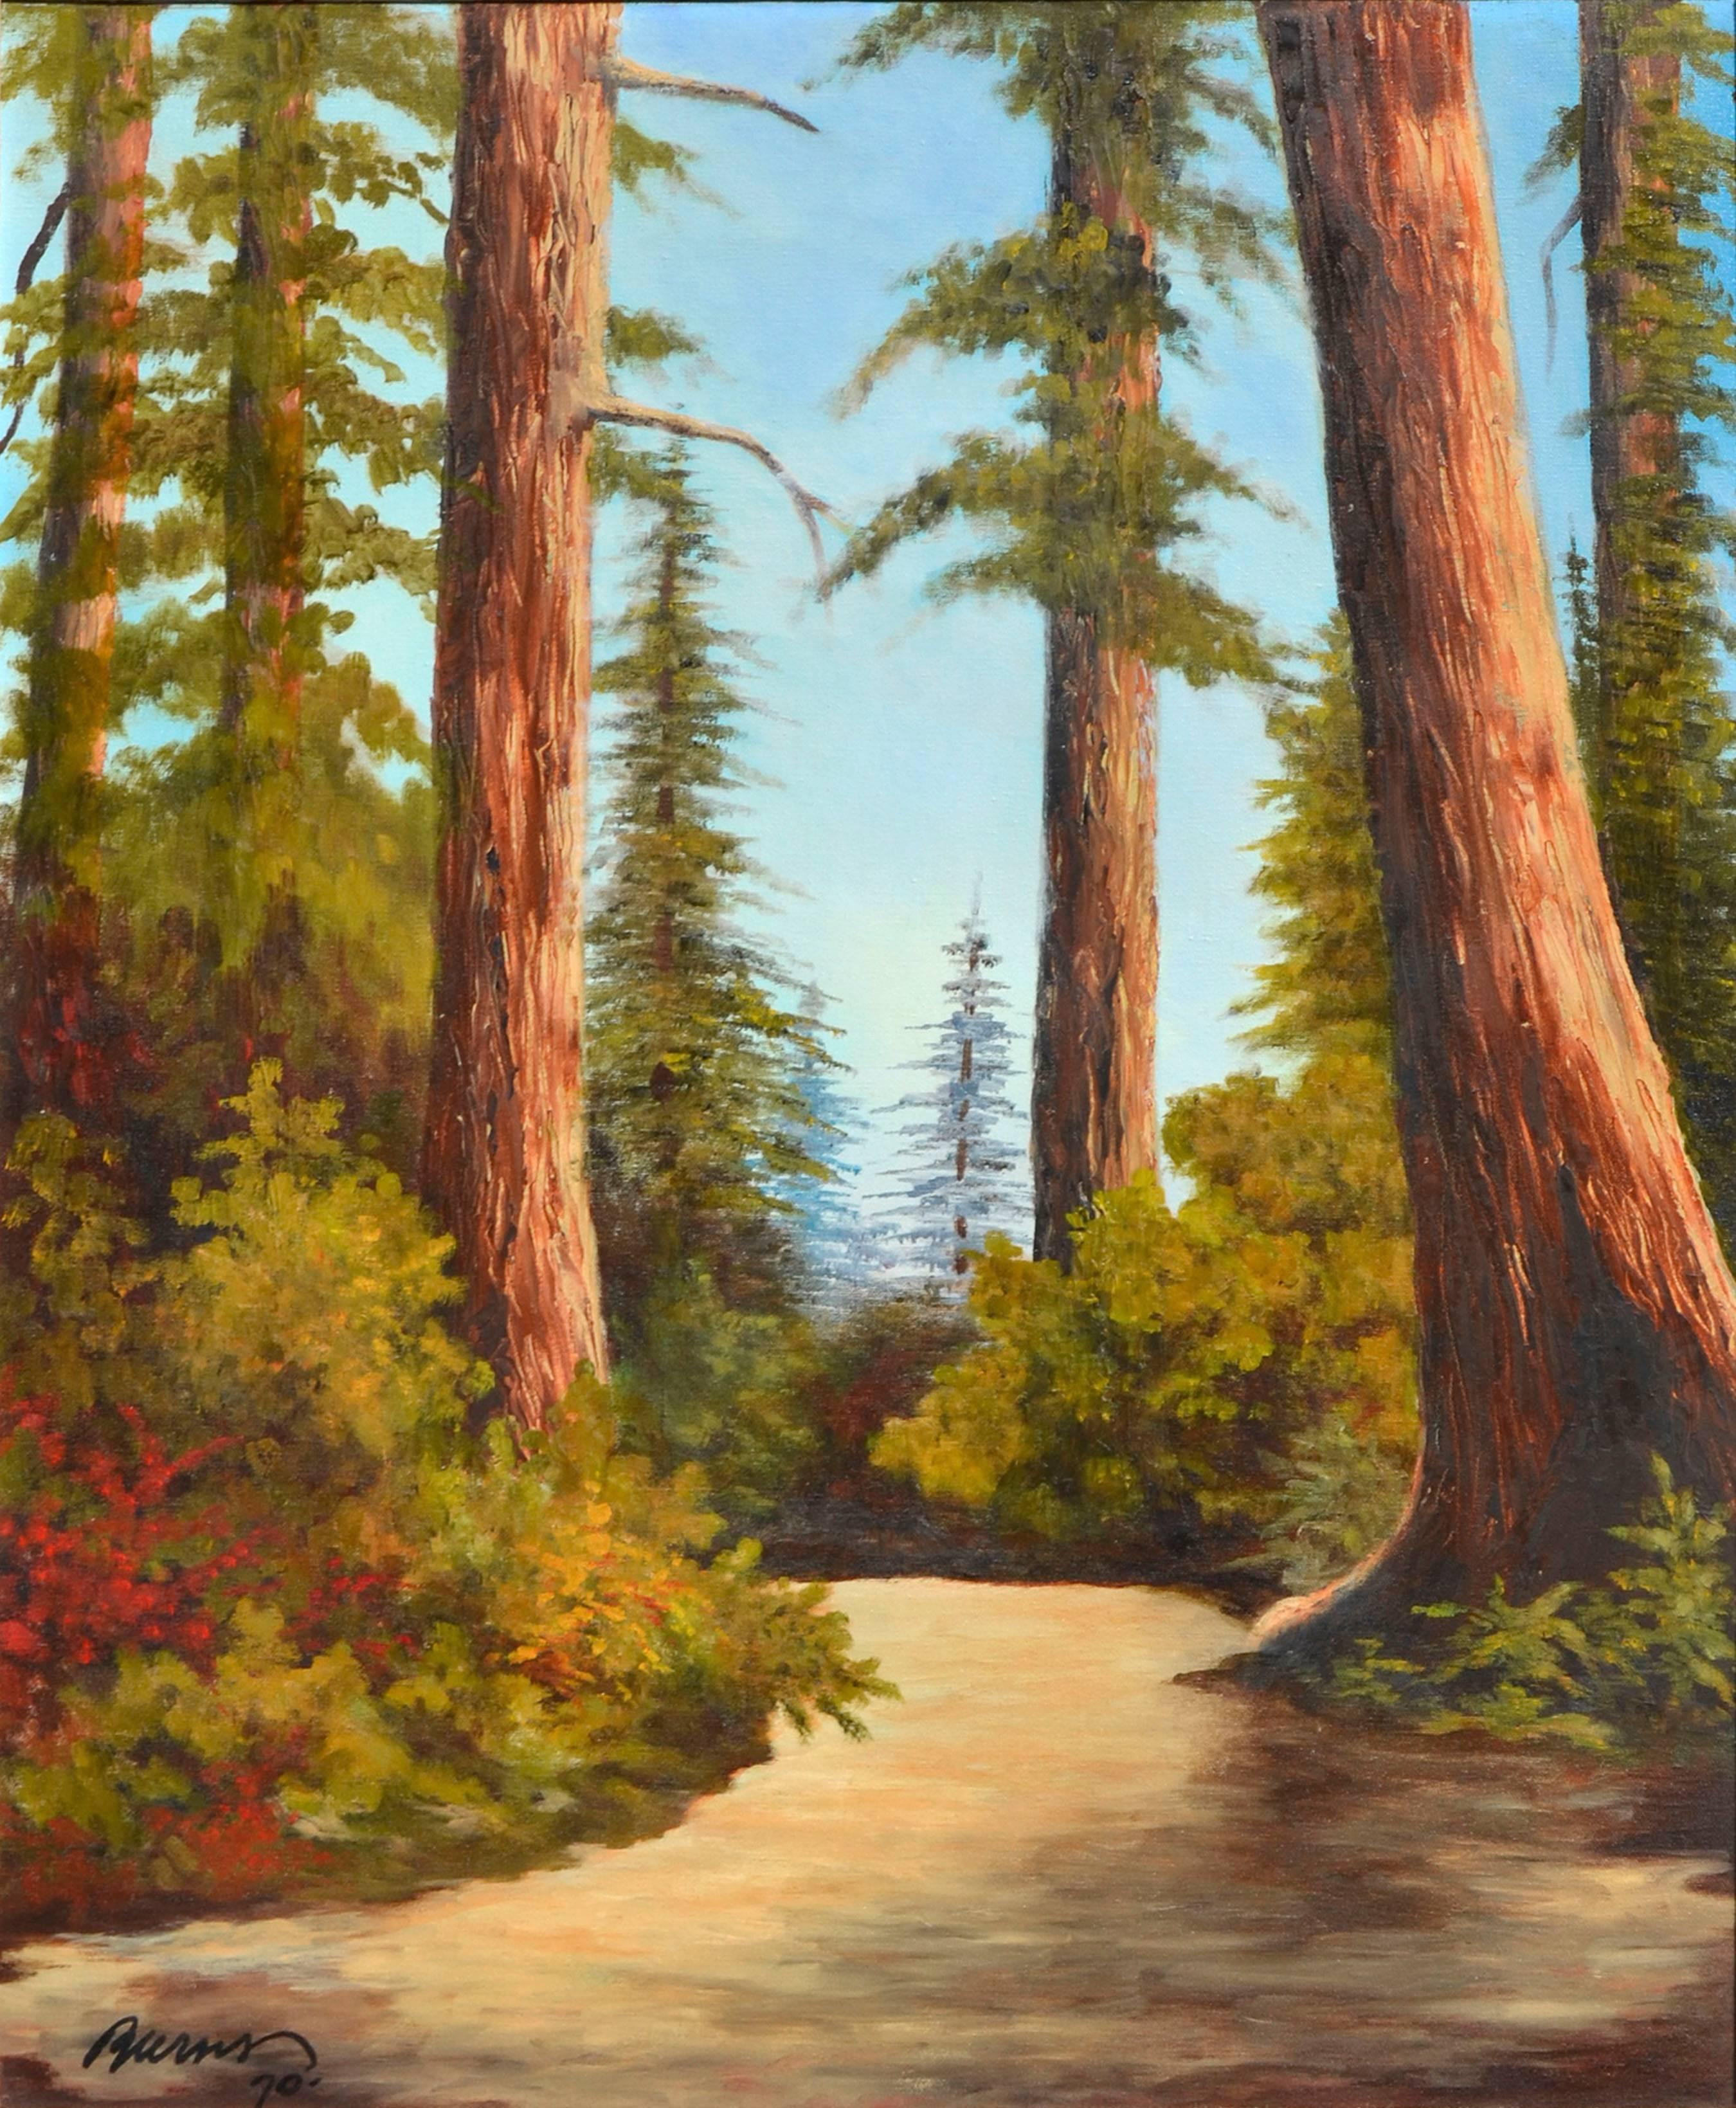 California Redwoods Trail - Burns 1